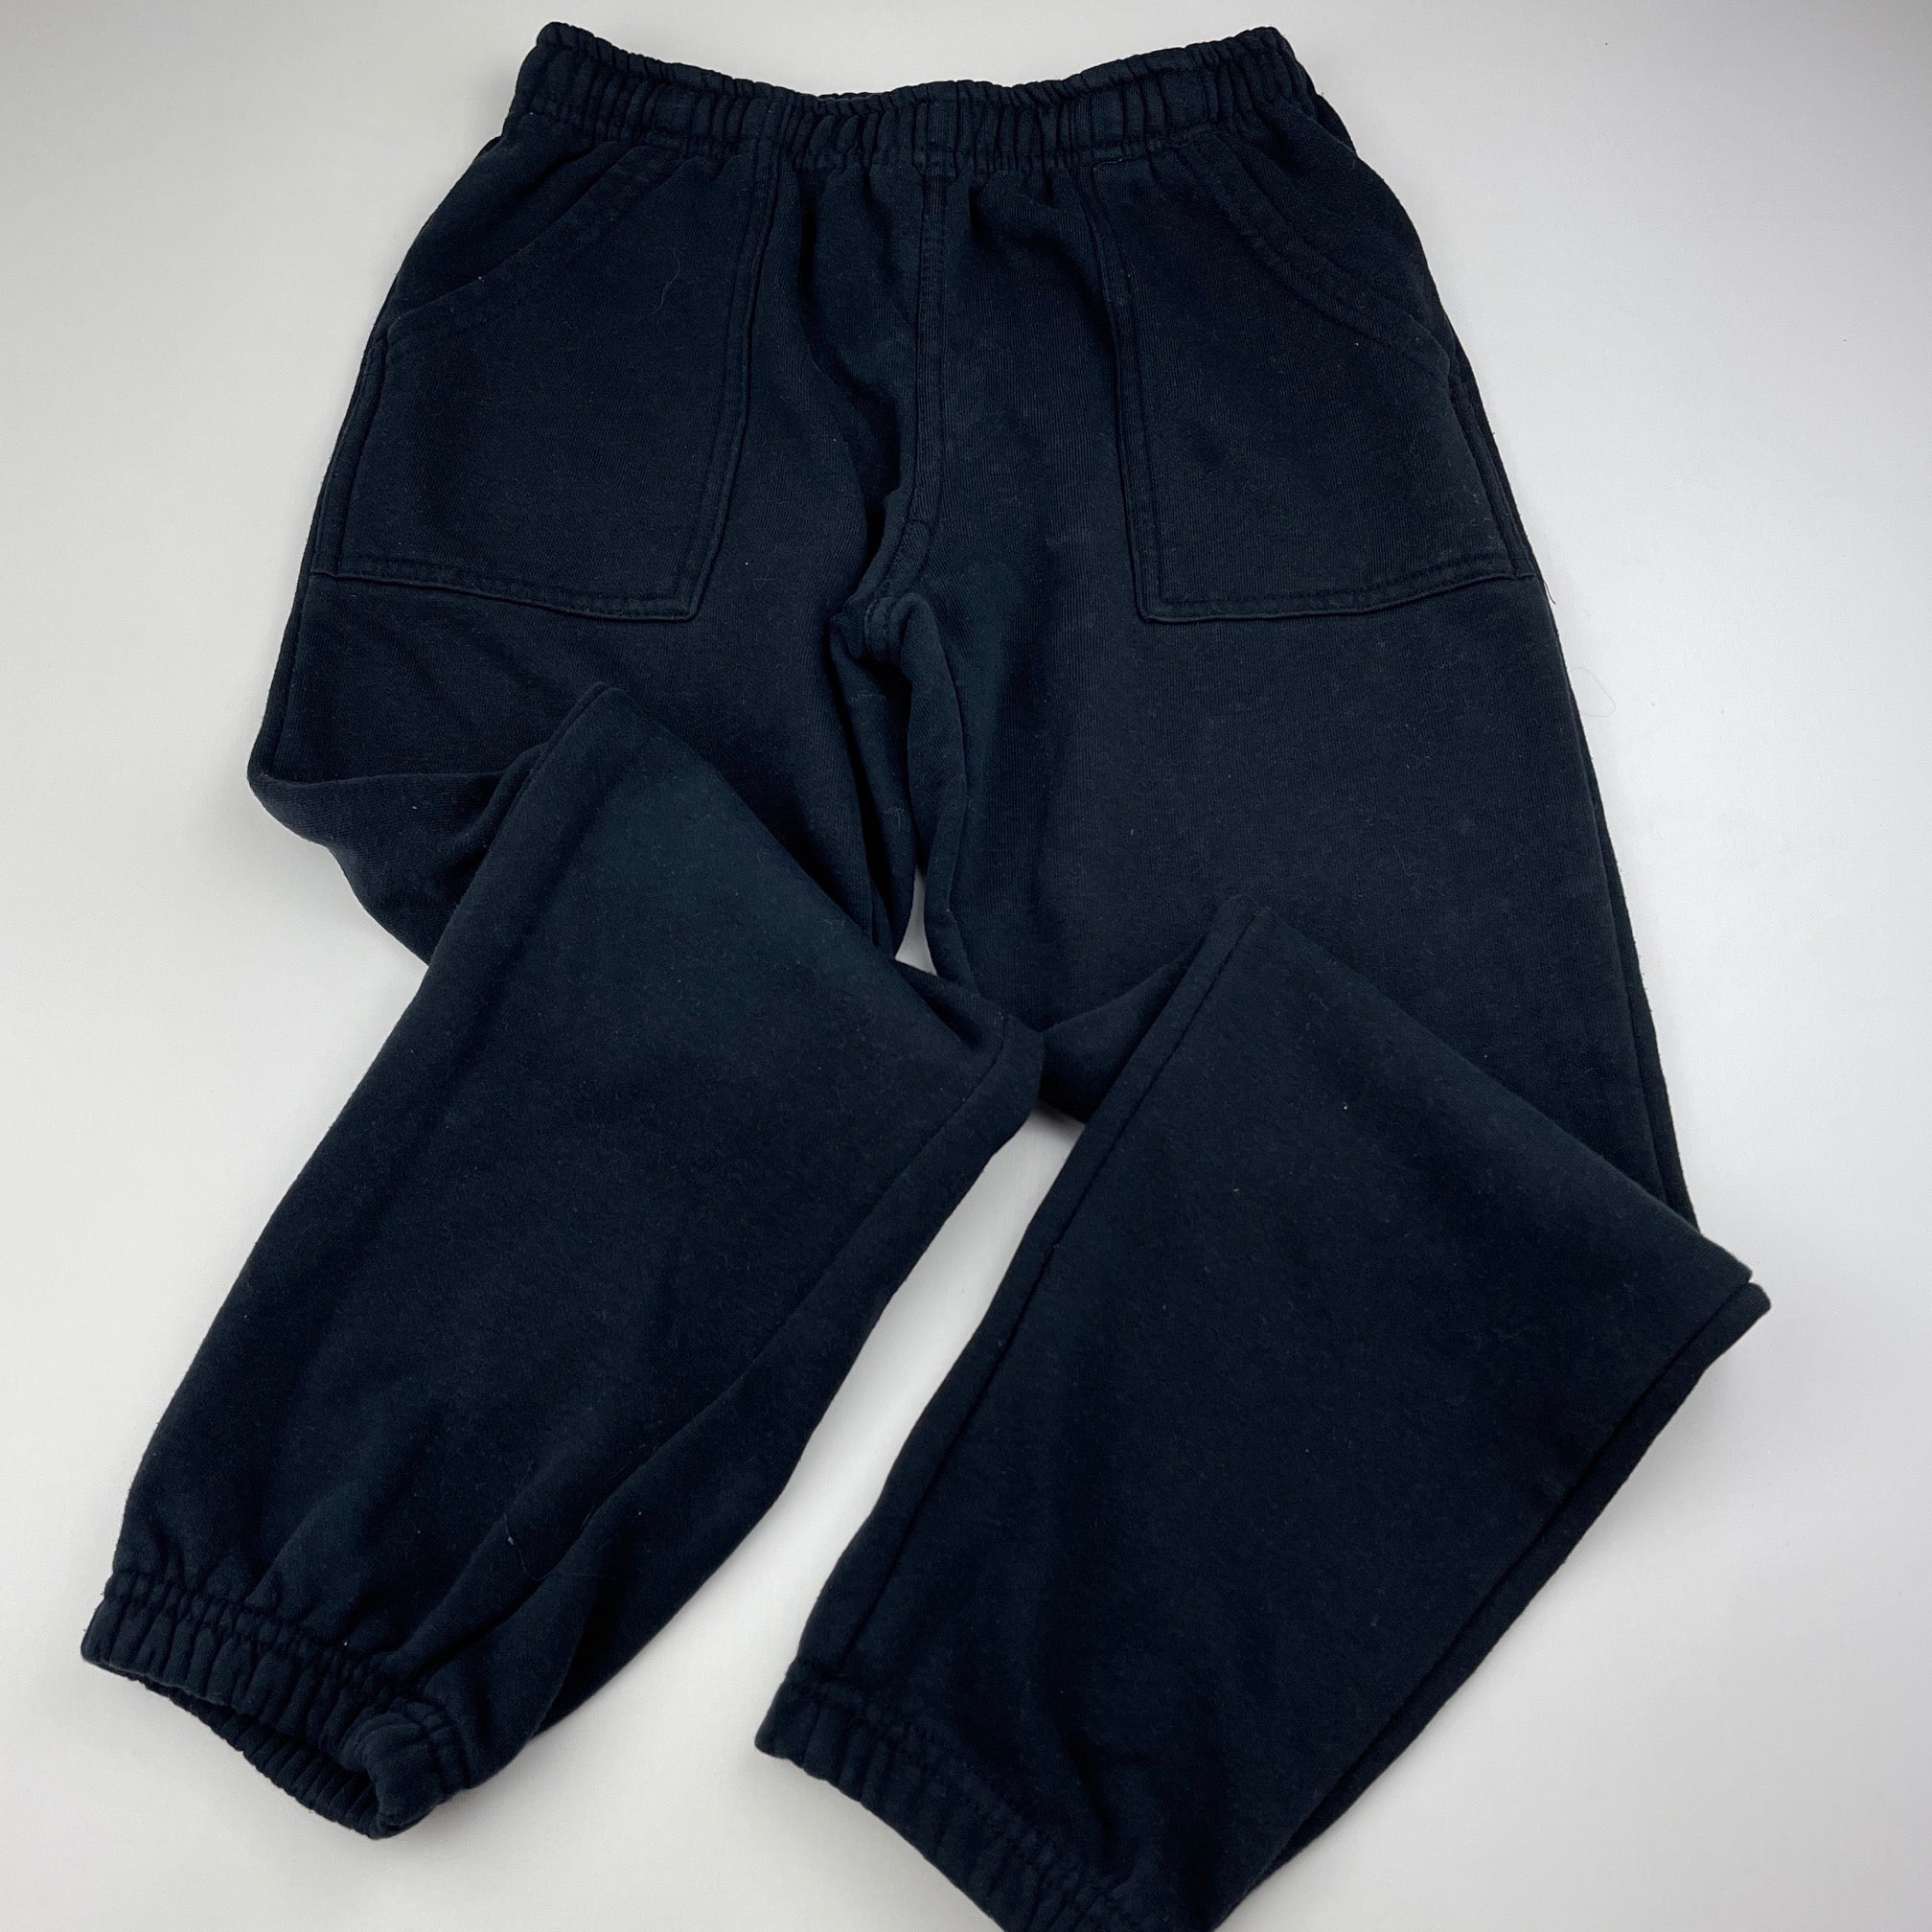 NEW Men's Fleece Lined Track Pants w Zip Pocket Striped Casual Track Suit  Pants | eBay